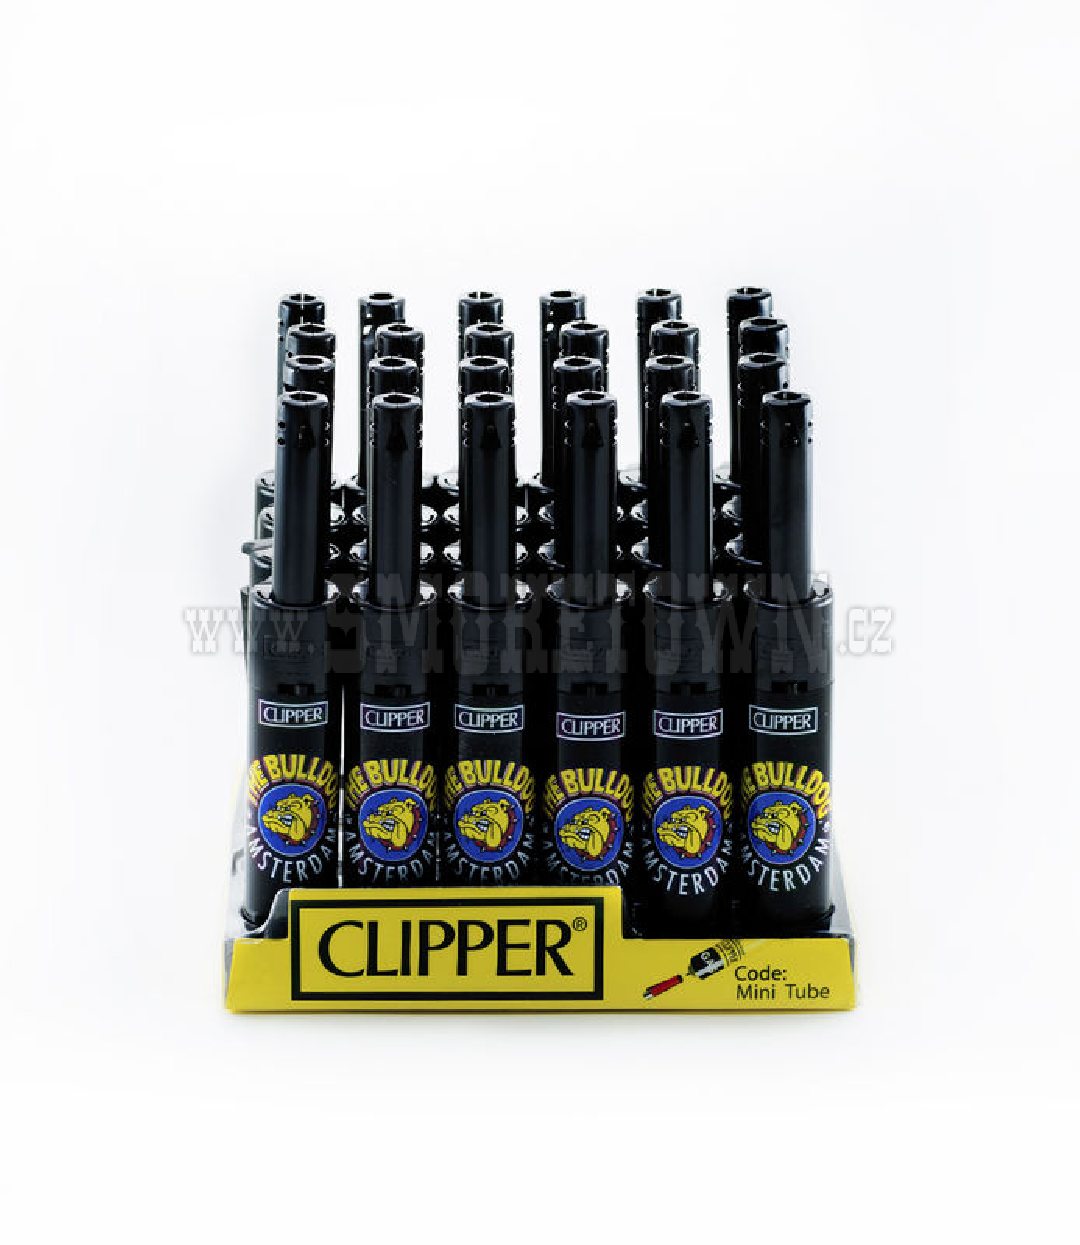 Clipper - The Bulldog Mini Tube